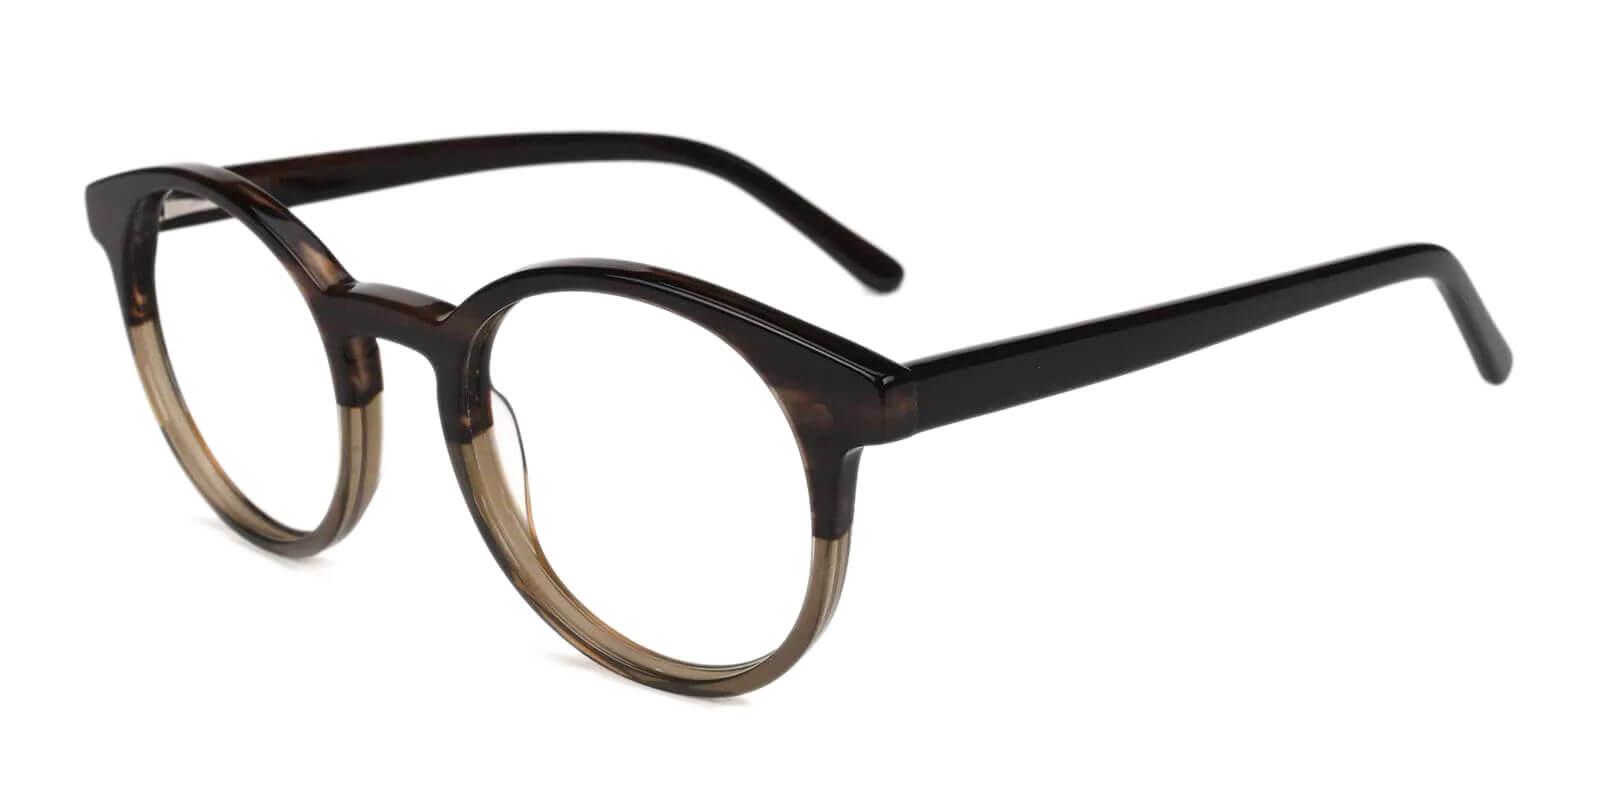 Ottawa Clip-On Brown Acetate Eyeglasses , Fashion , UniversalBridgeFit Frames from ABBE Glasses